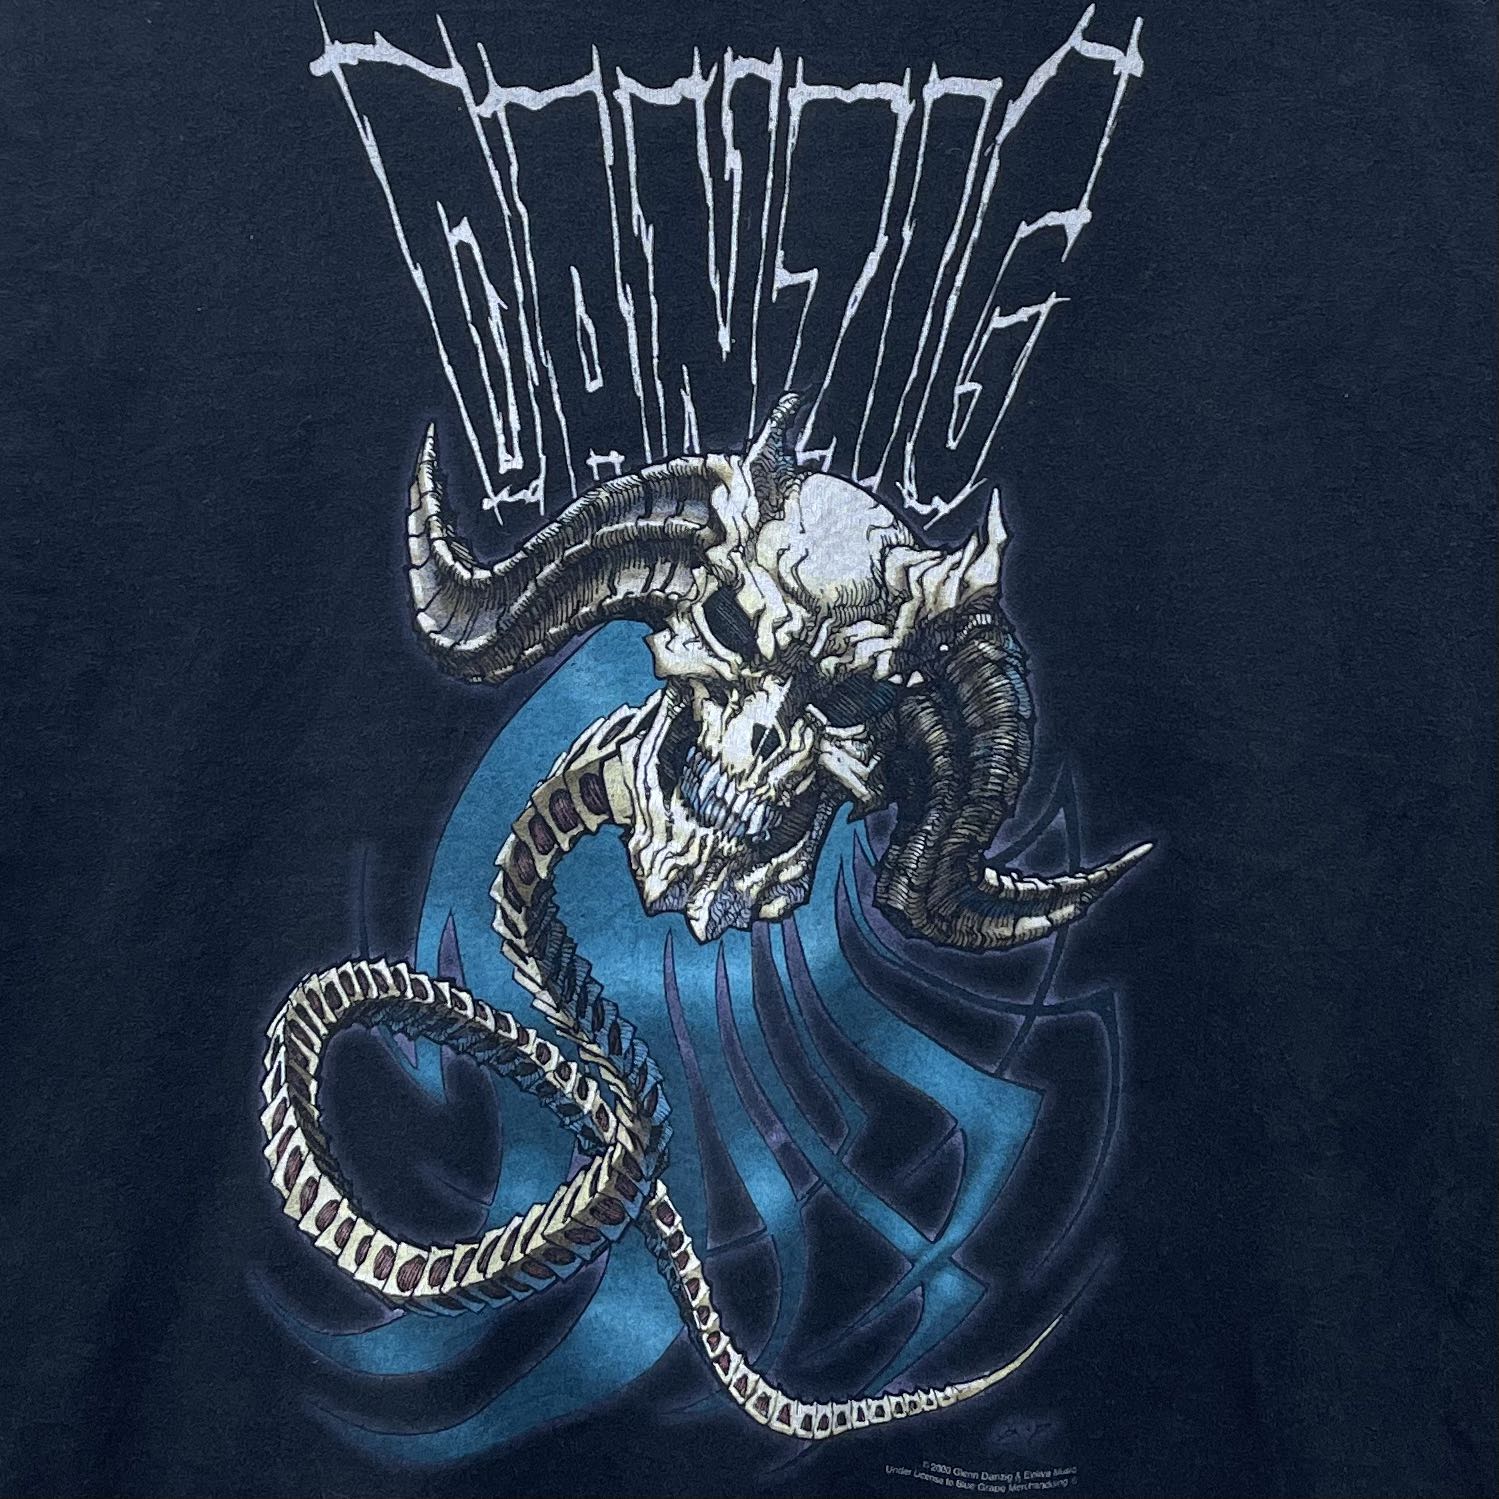 Vintage 2000 Danzig Shirt Concert Shirt Band Tee Danzig Tee The Misfits Shirt Misfits Tee DANZIG Shirt Size Xlarge - 2